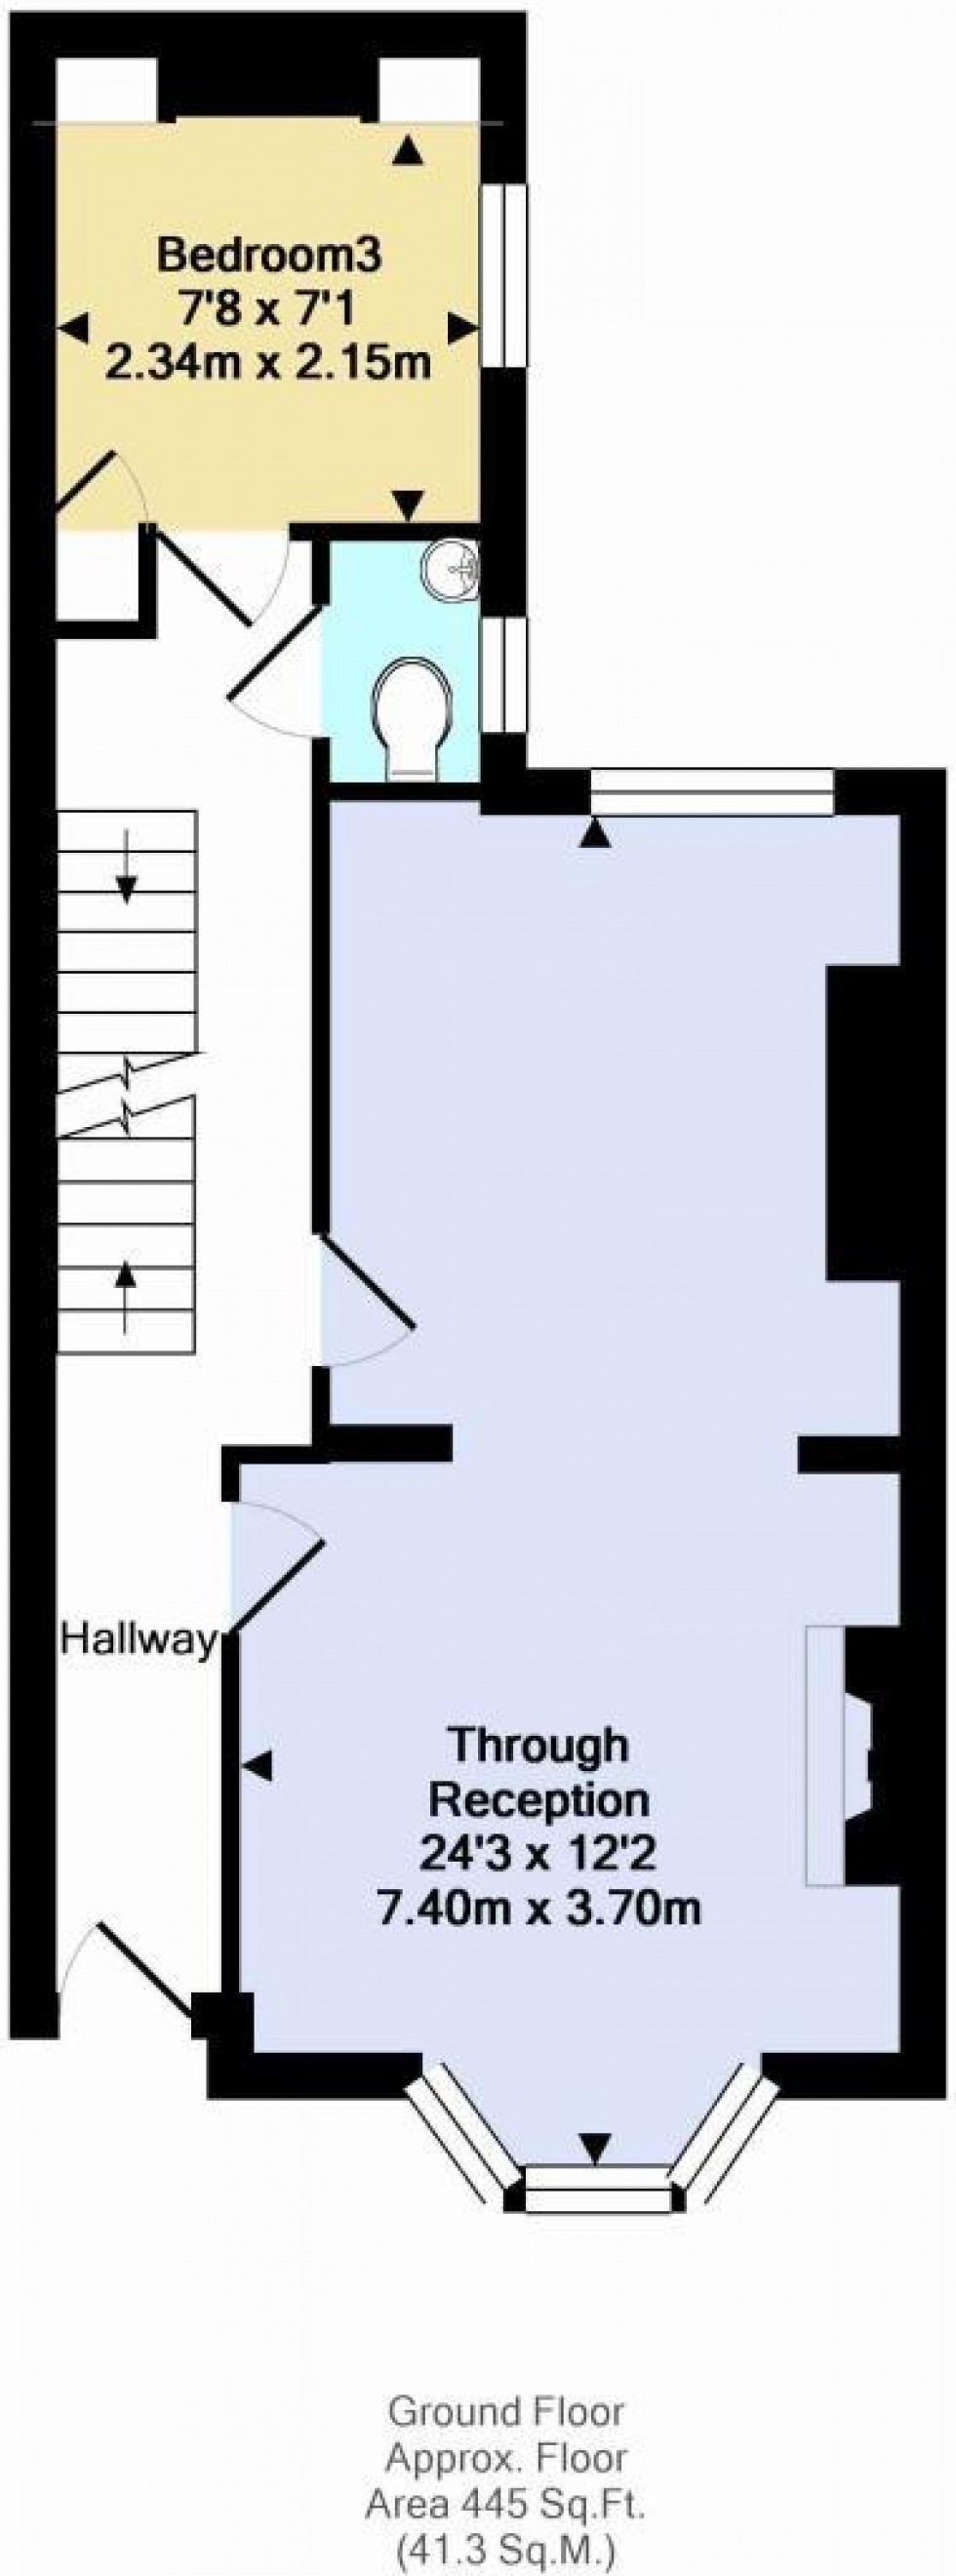 Floorplan for Clifton Street, Brighton